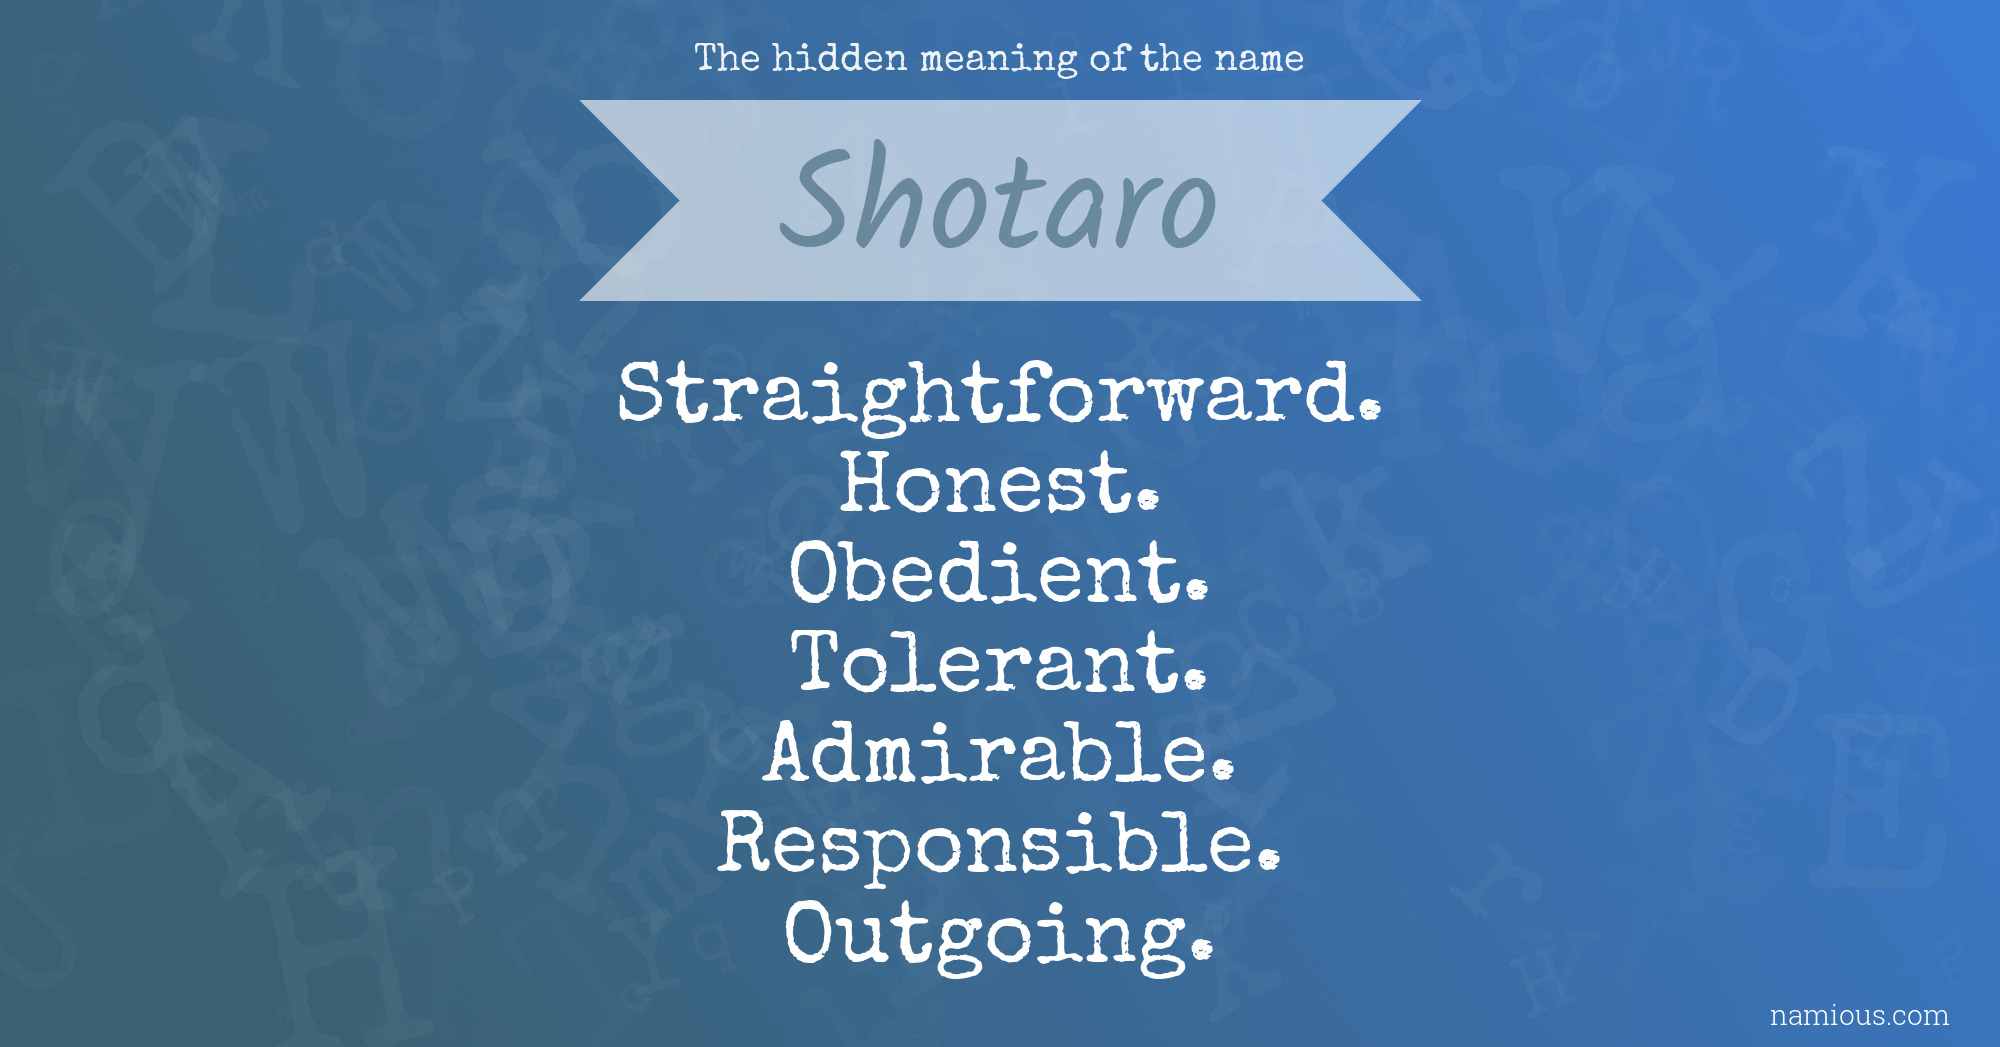 The hidden meaning of the name Shotaro